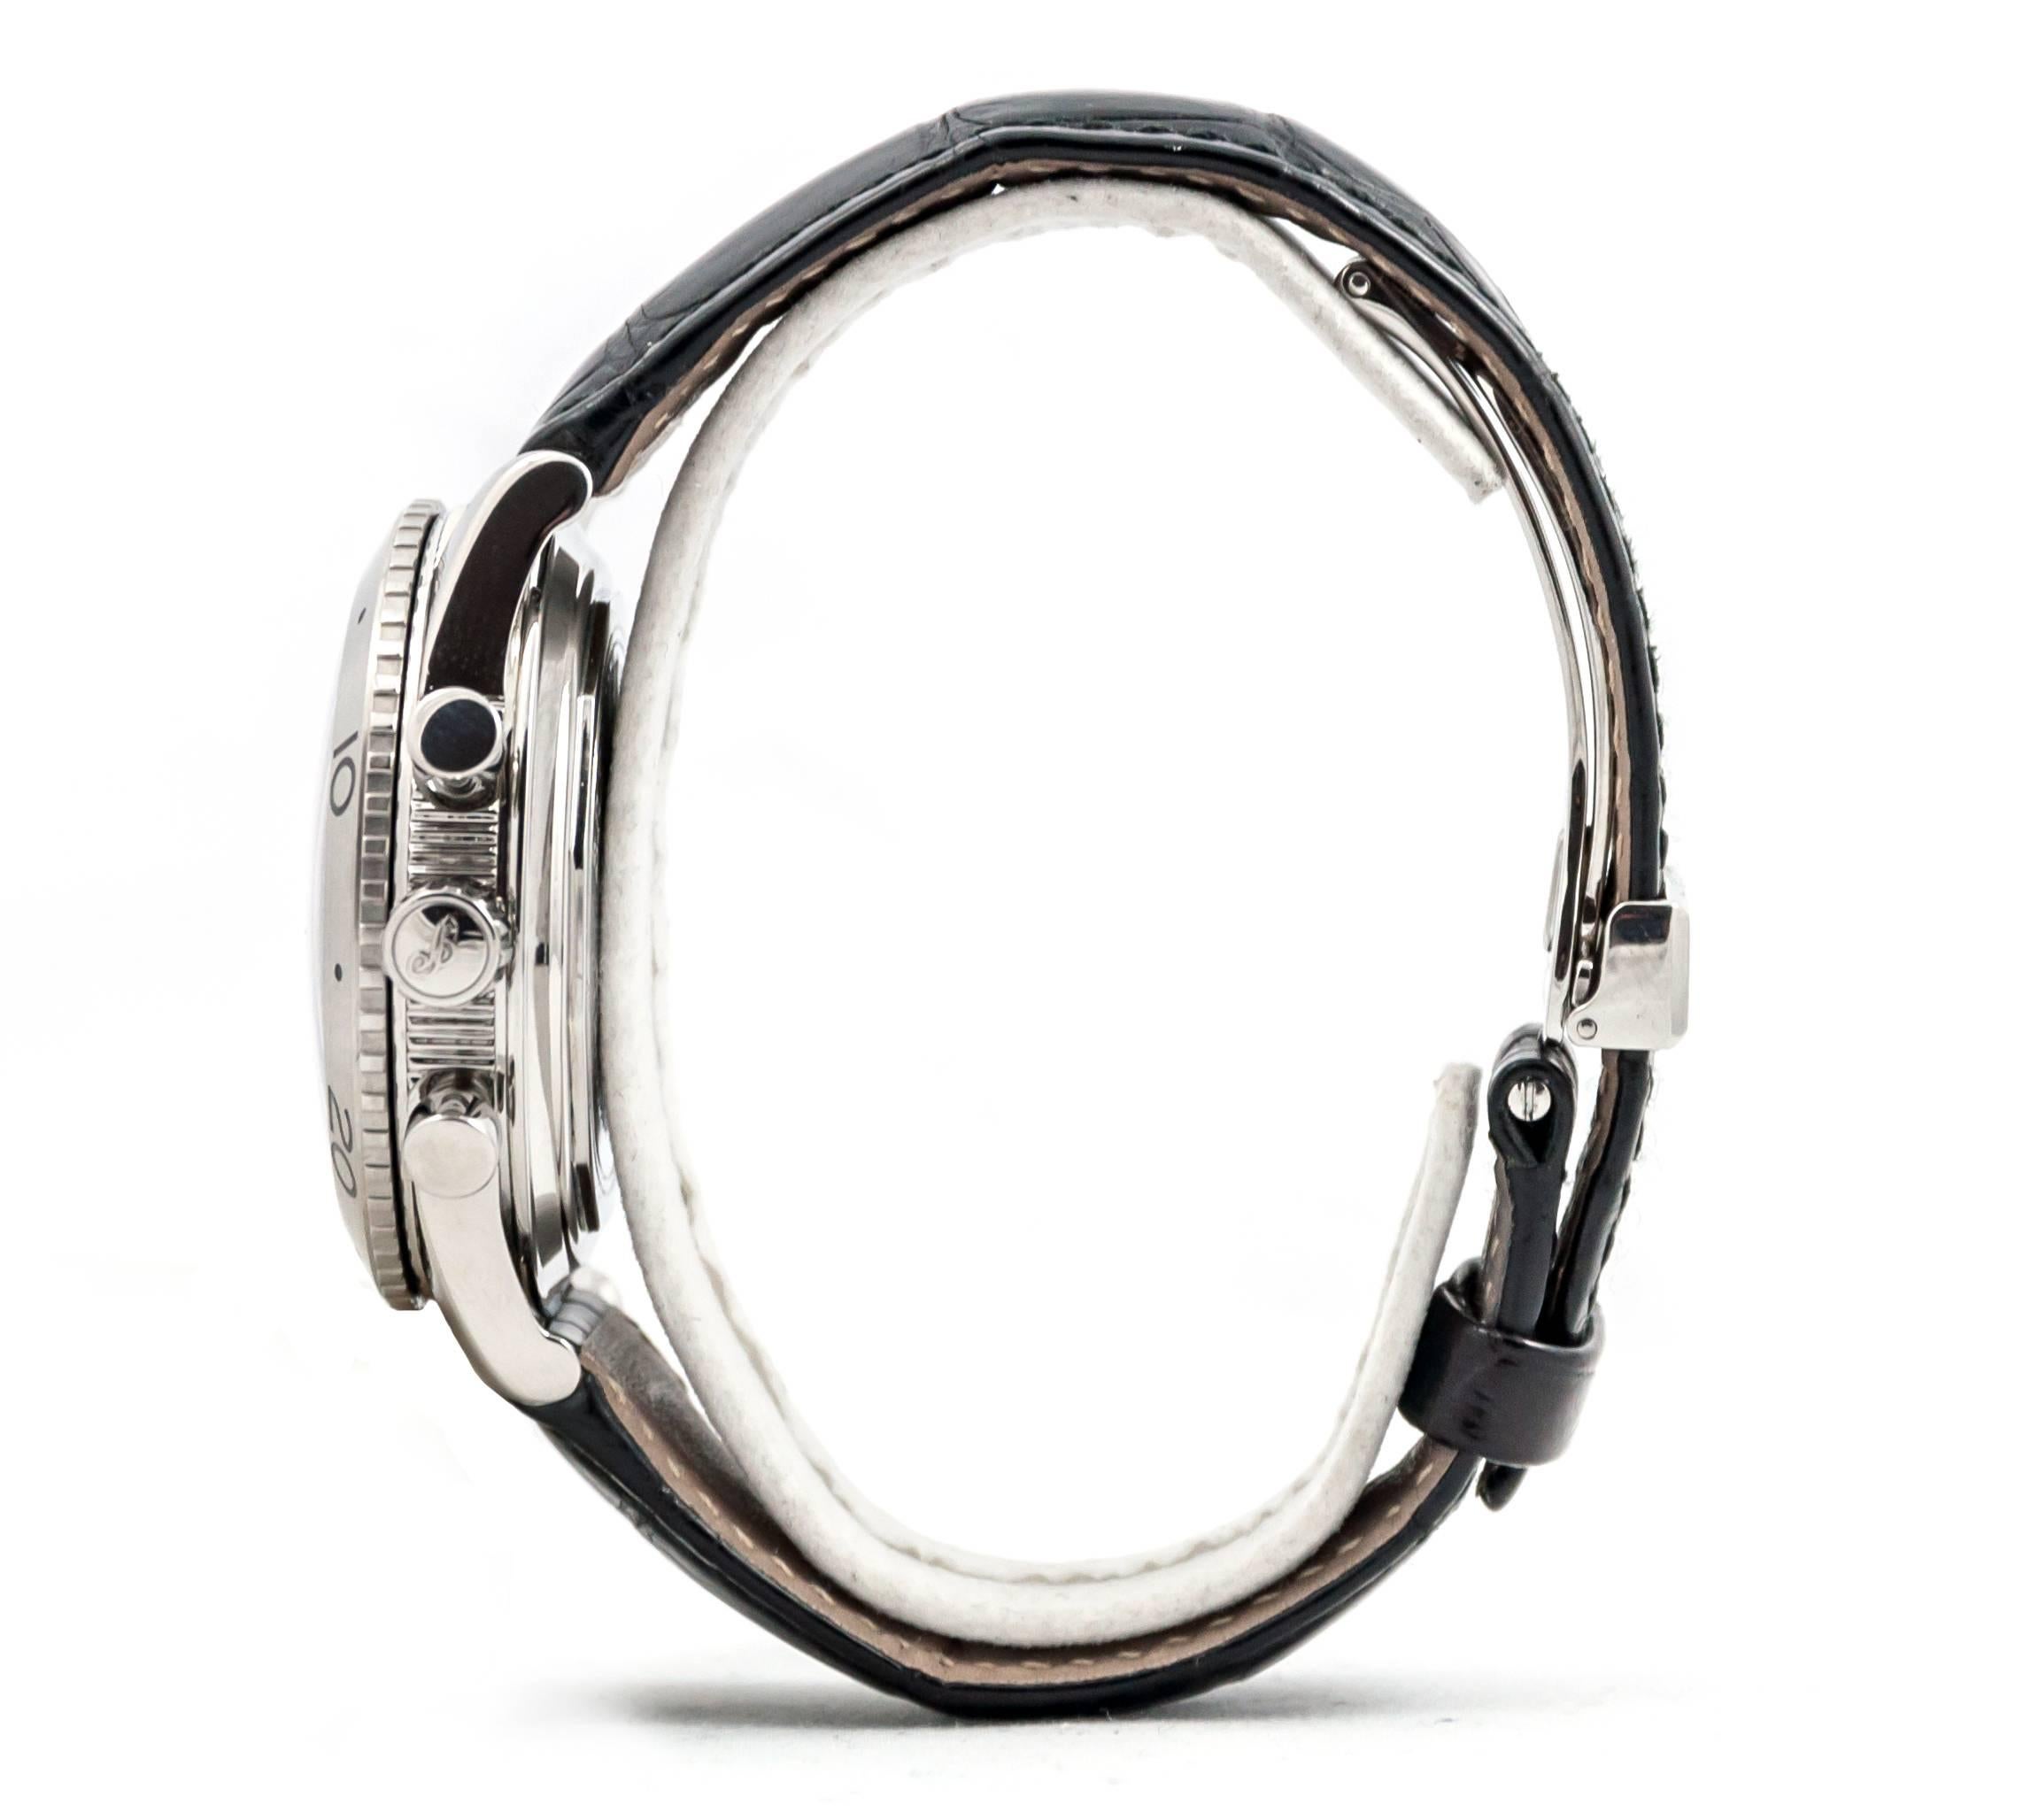 Breguet
Chronograph watch.
Steel / Black leather strap.
Buckle Breguet.
Ref. Transatlantic 3820.
Automatic movement.
Warranty 1 year.